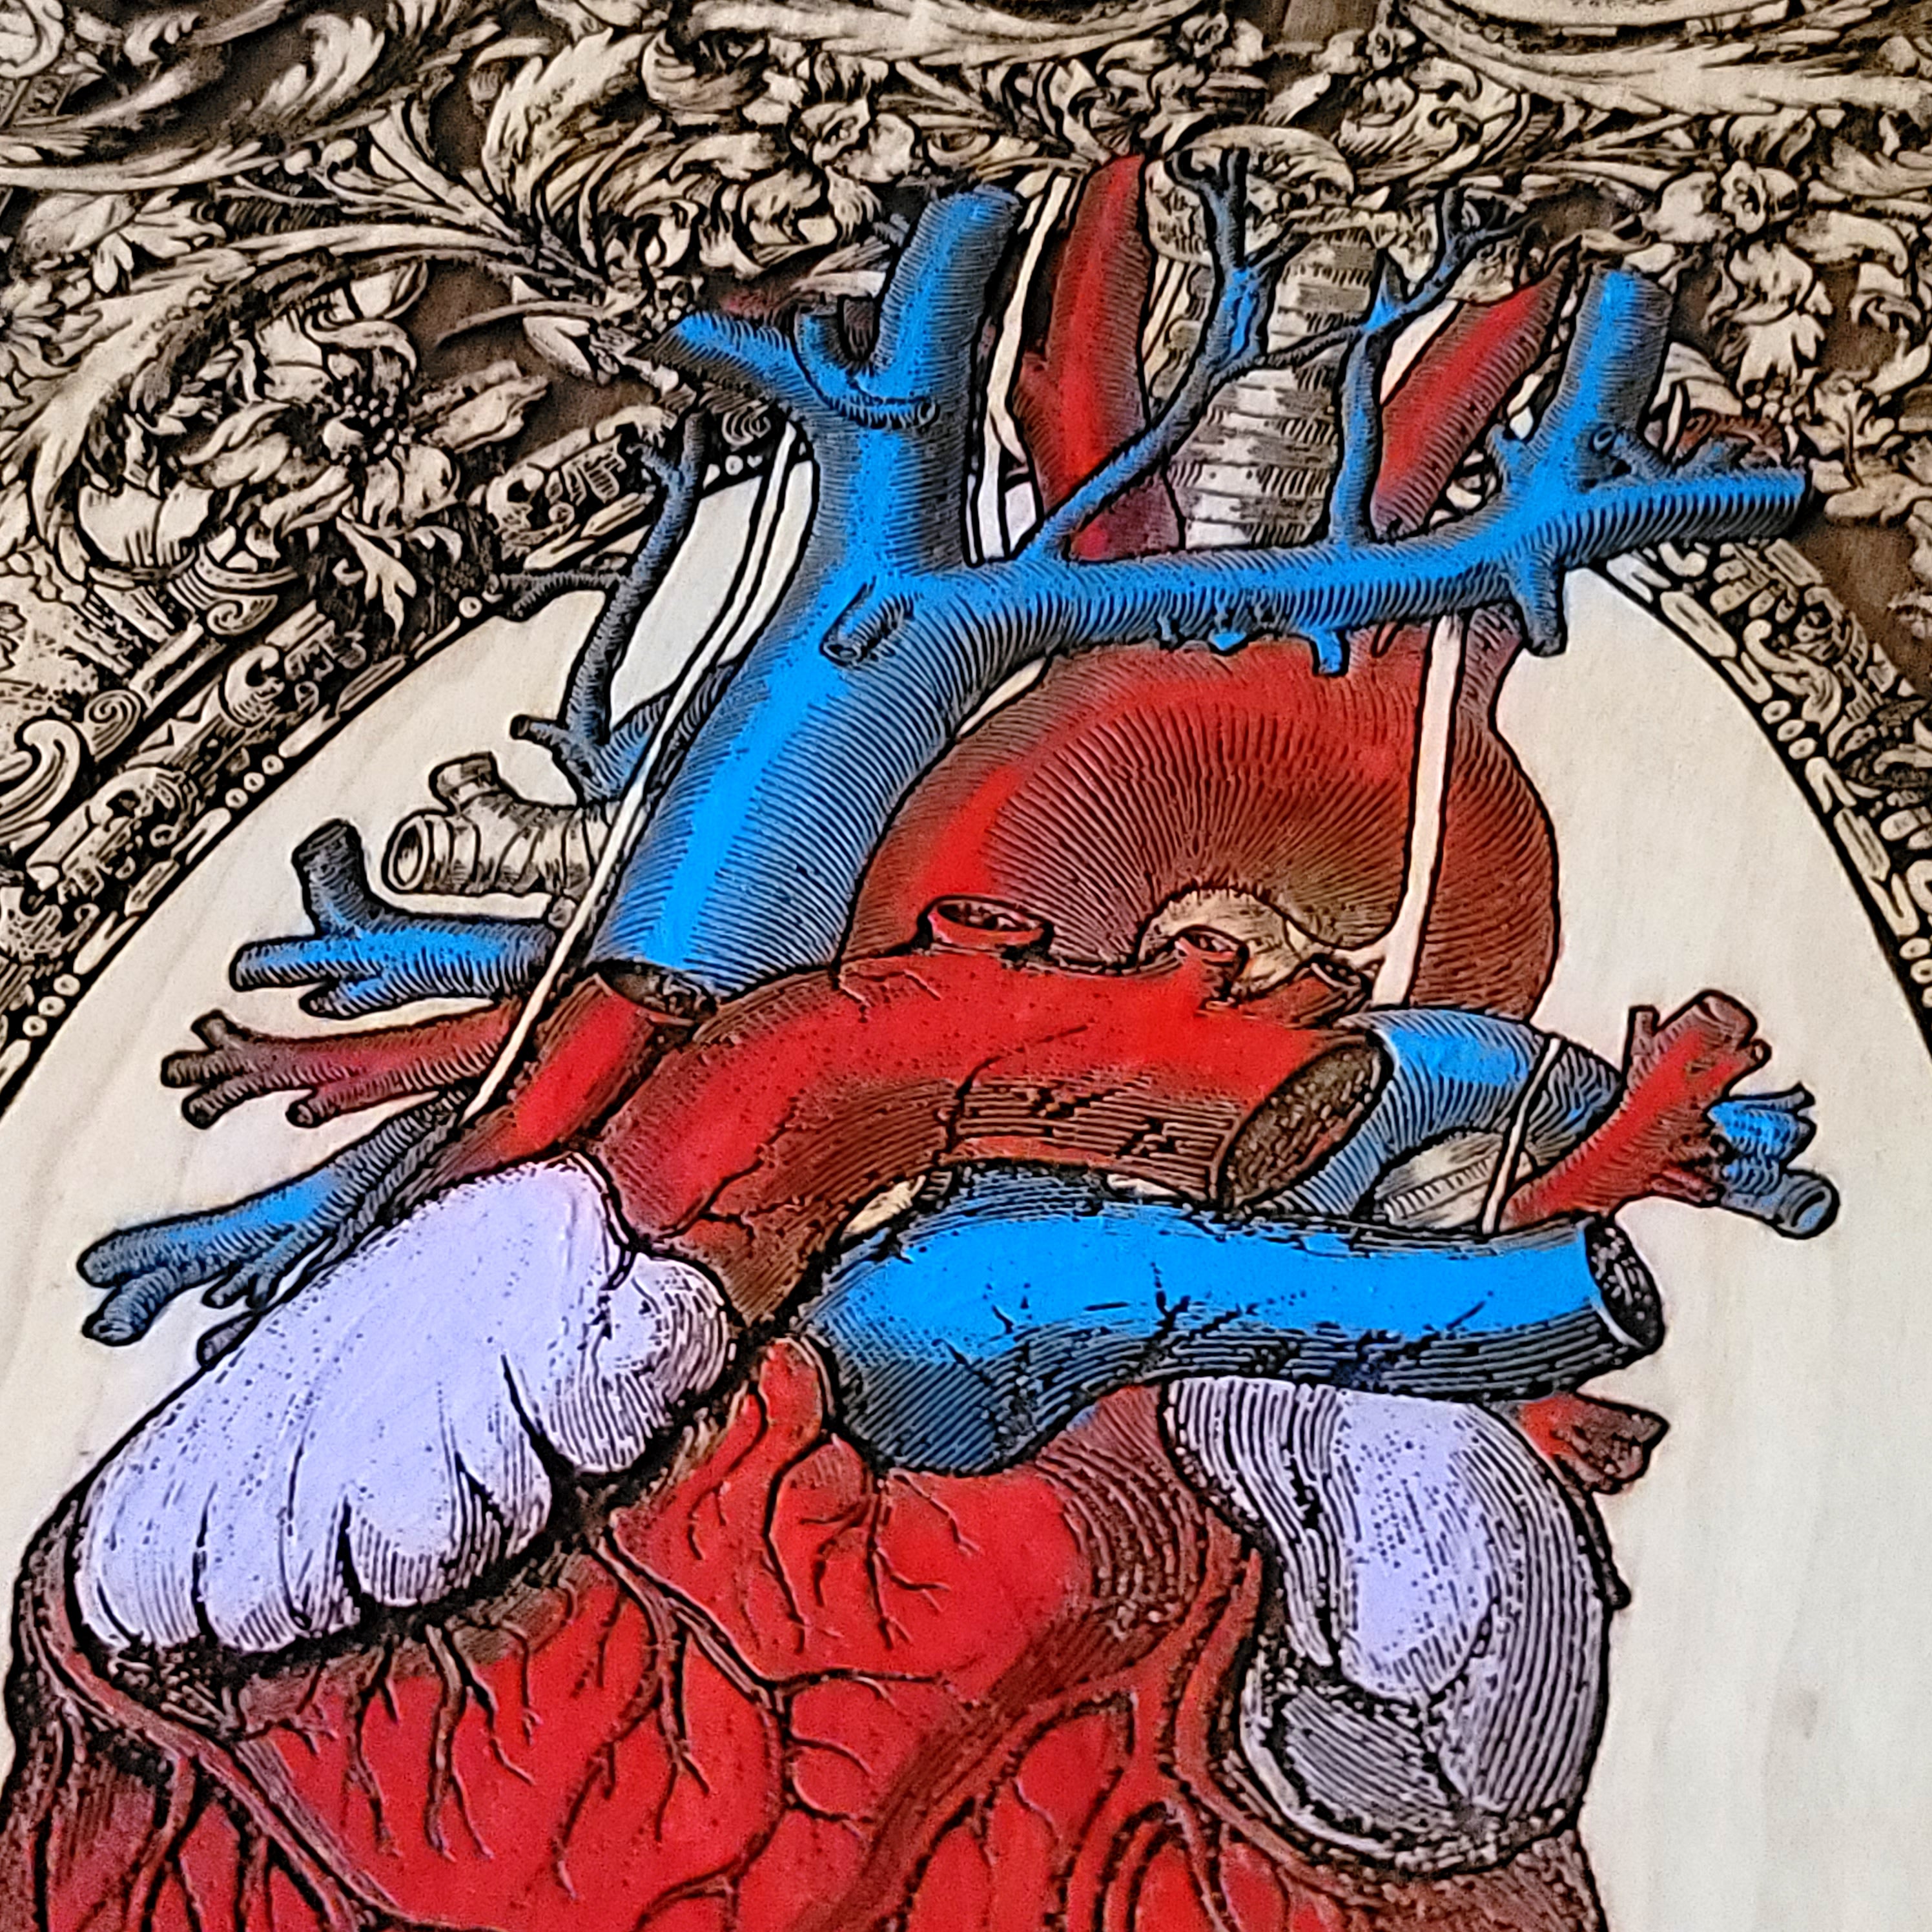 Heart Artwork - Large